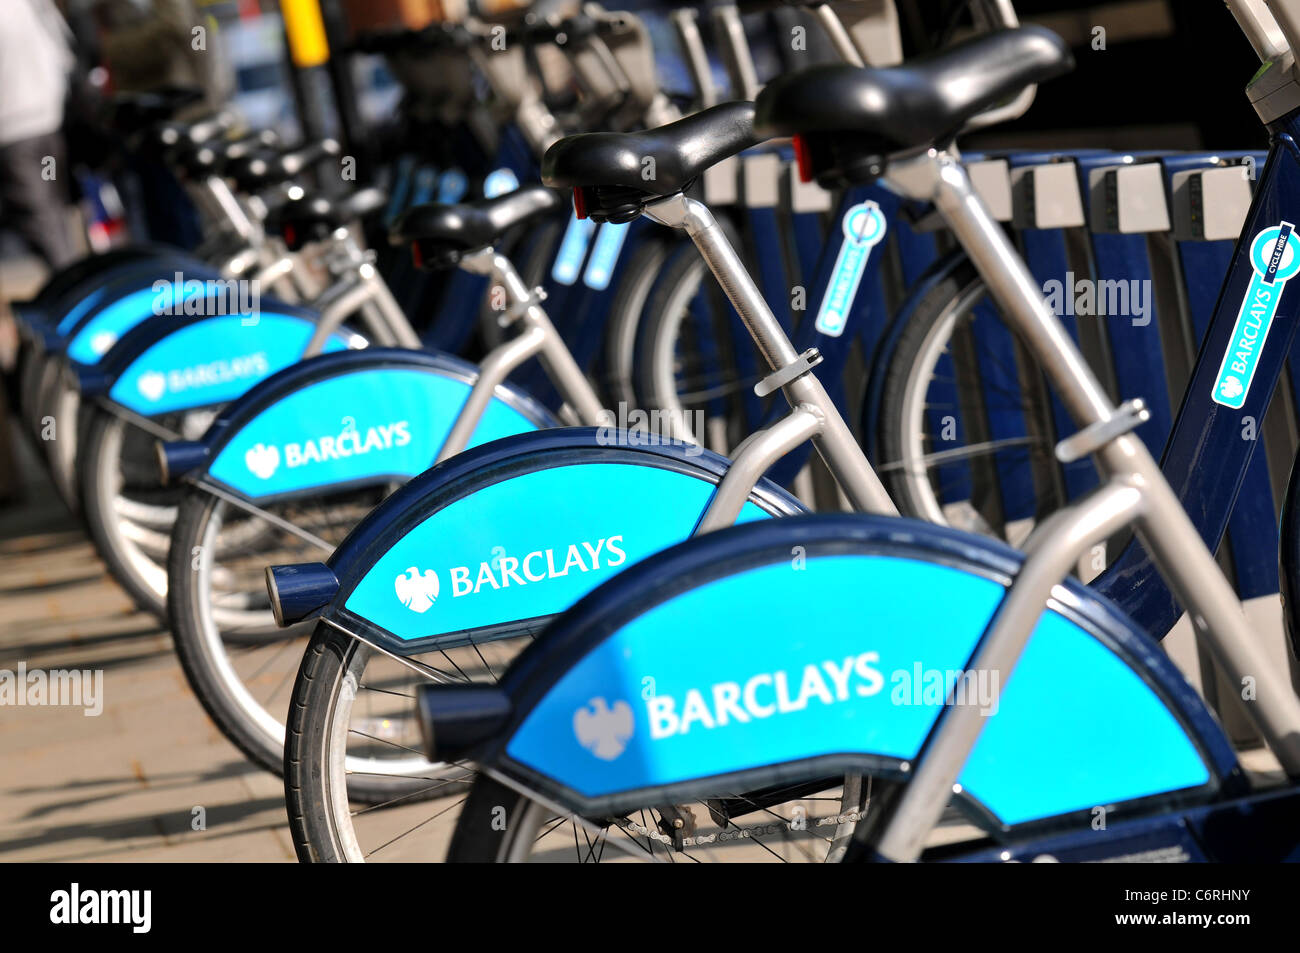 Hire cycles, London, Barclays Cycle Hire, Transport for London Cycles, bicycles or cycle hire station, London, Britain, UK Stock Photo